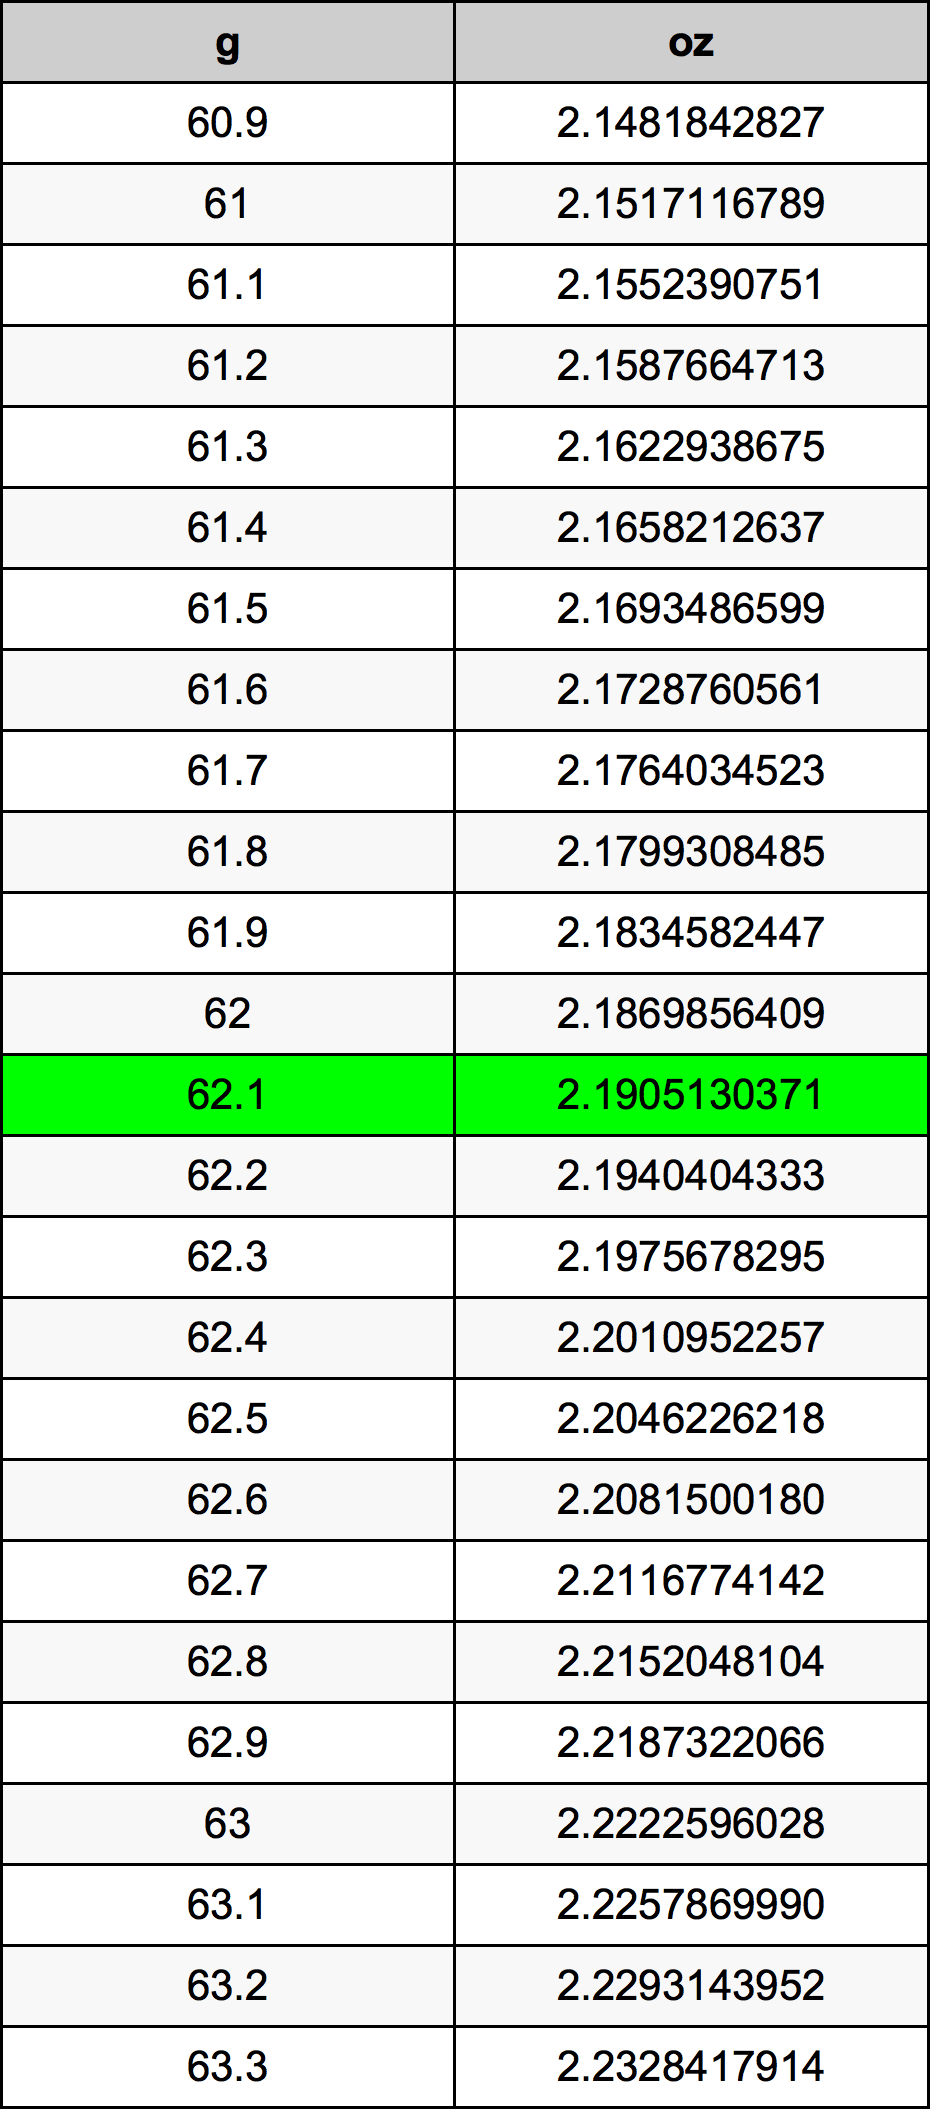 62.1 غرام جدول تحويل